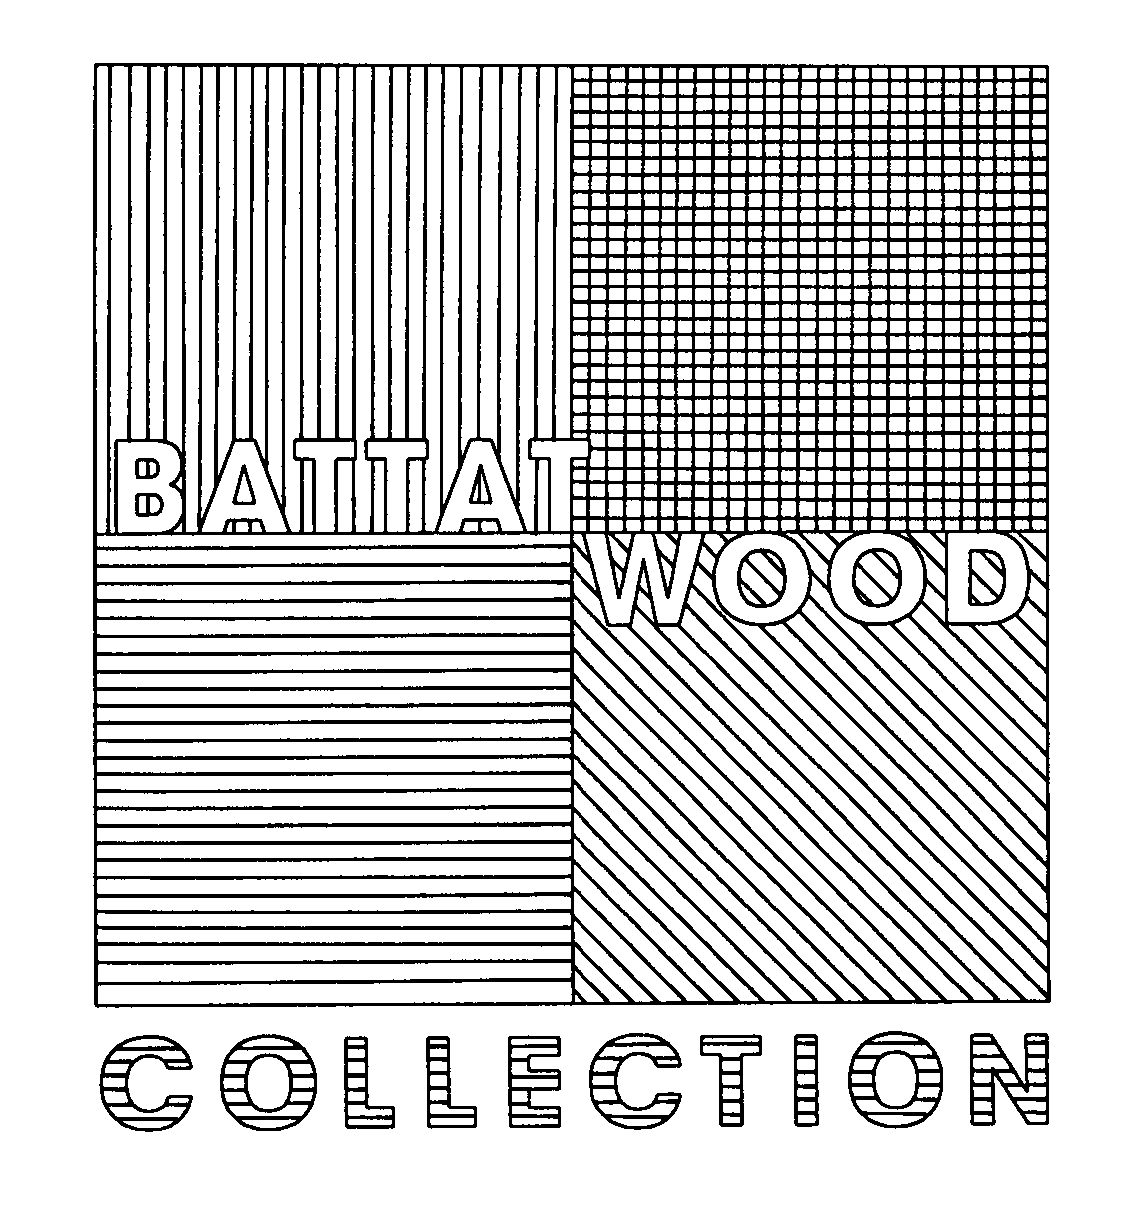  BATTAT WOOD COLLECTION